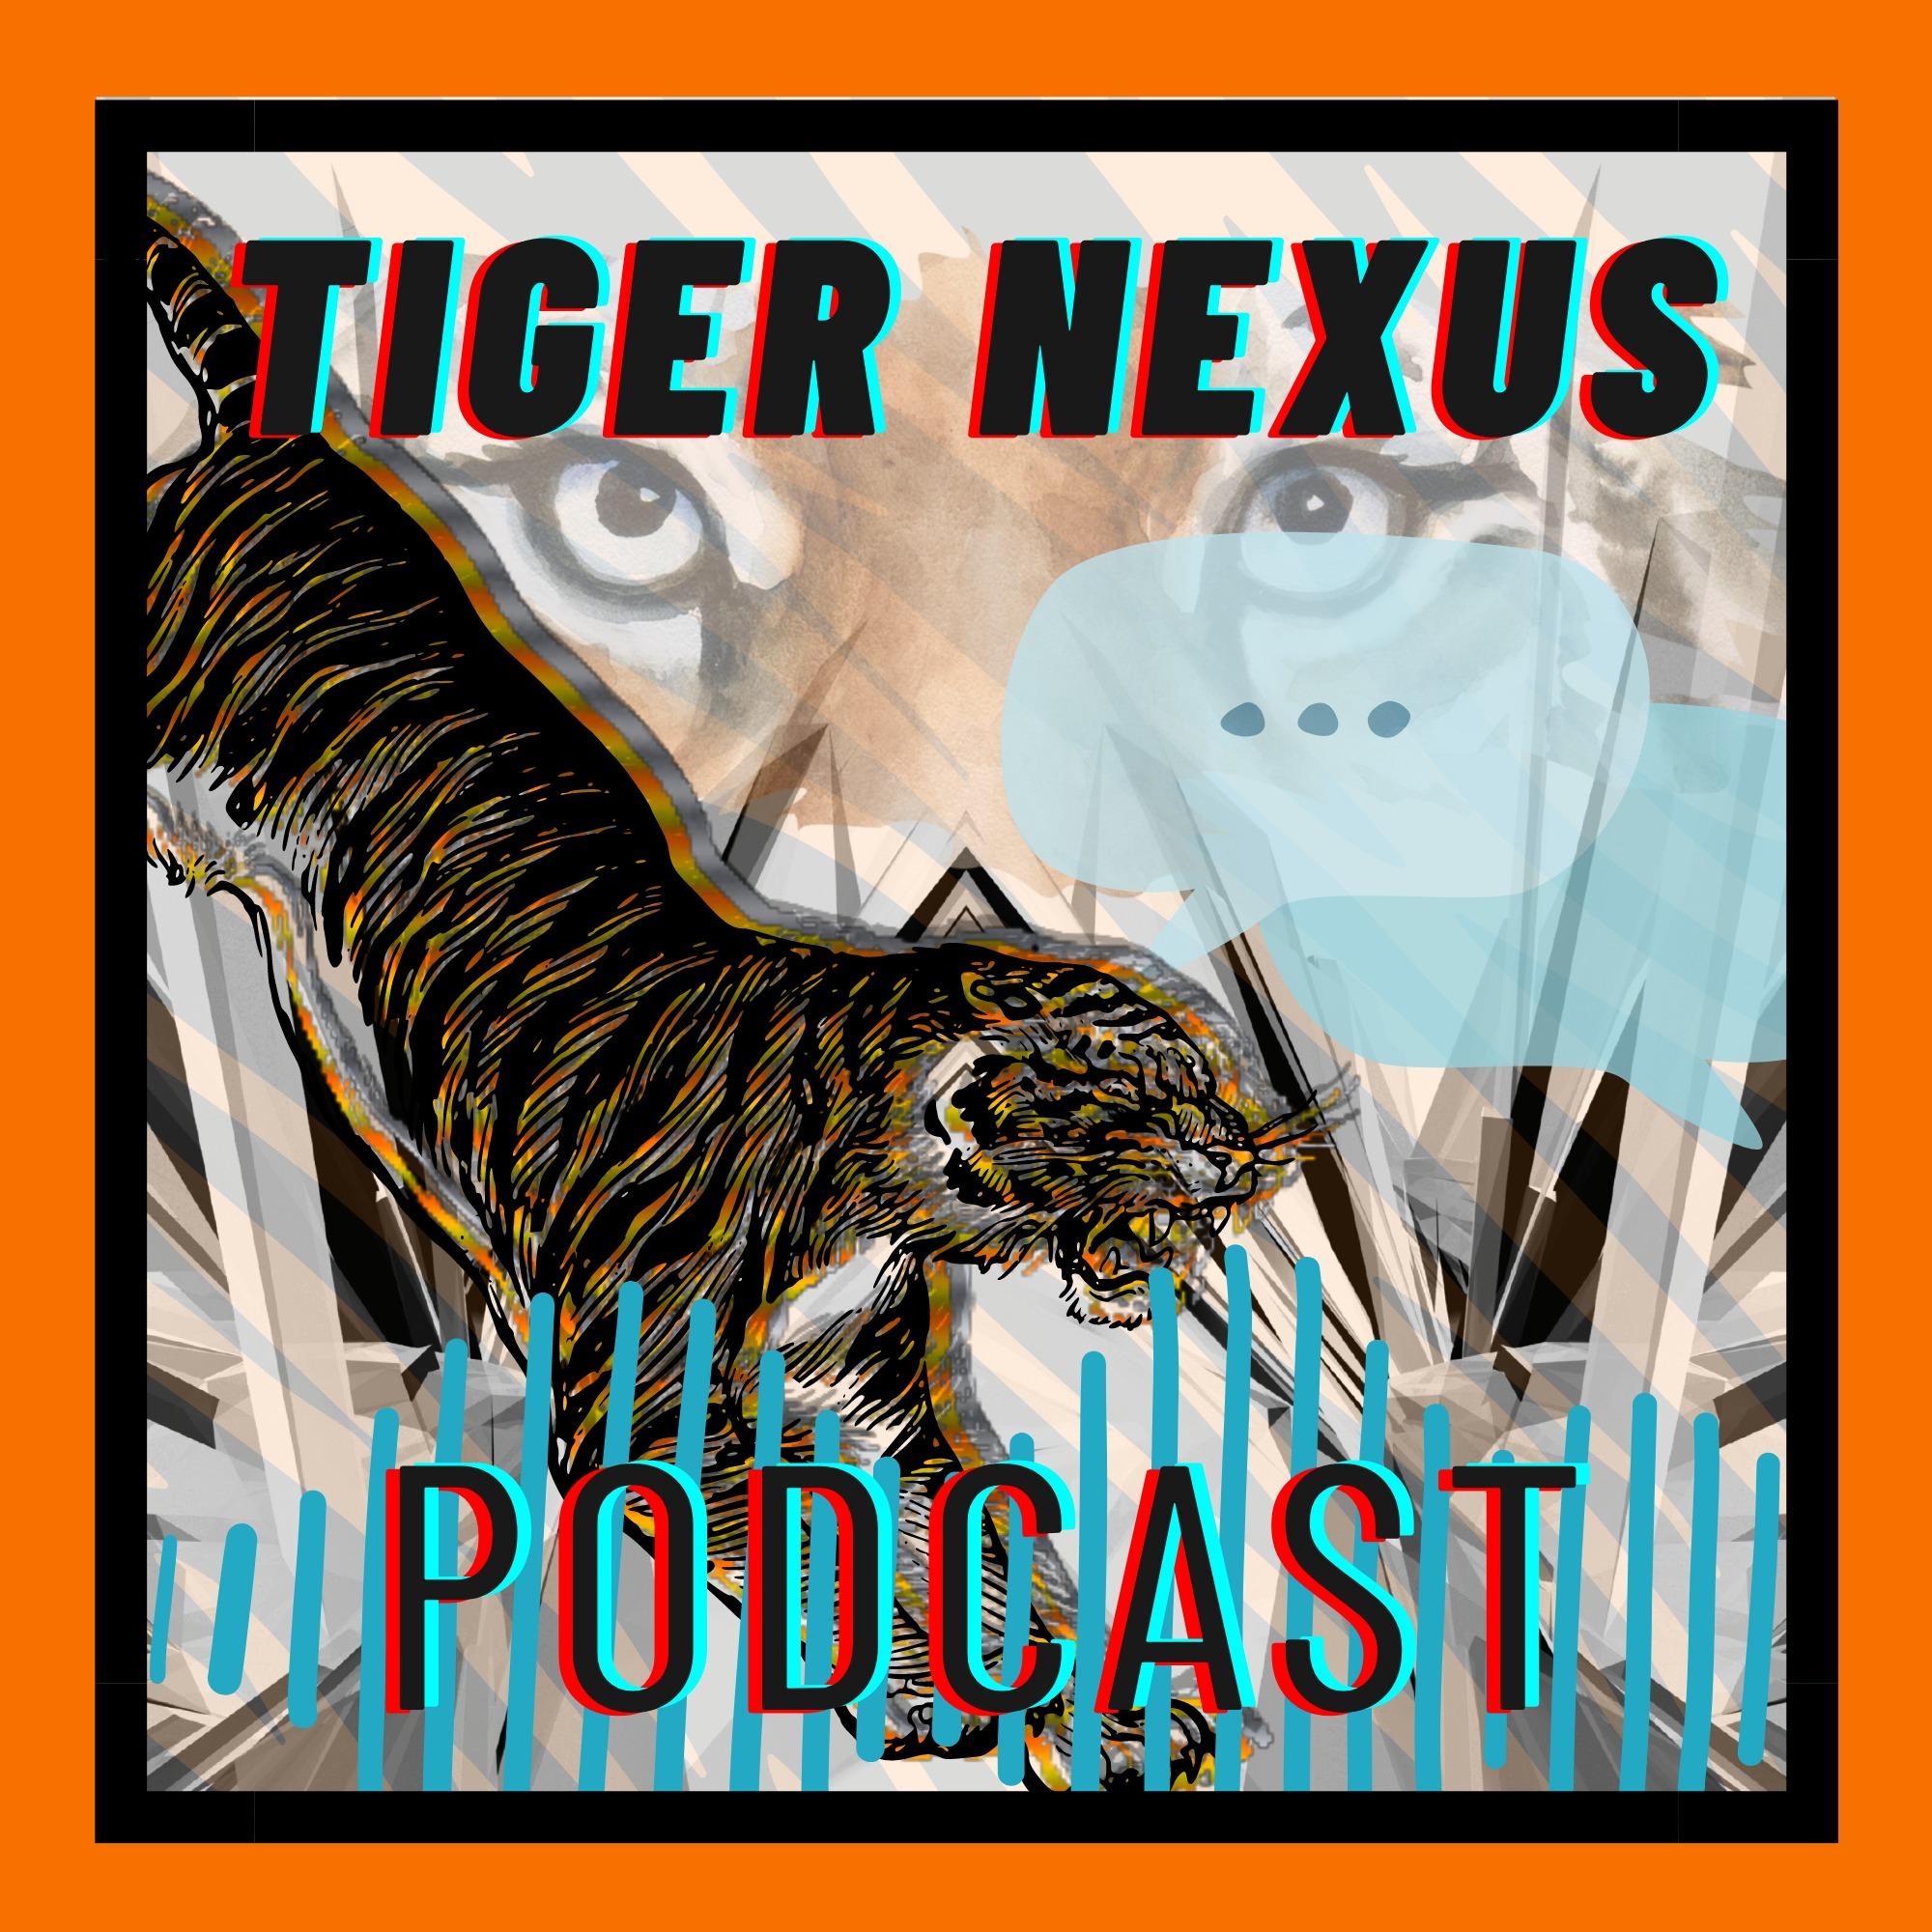 The Tiger Nexus Podcast